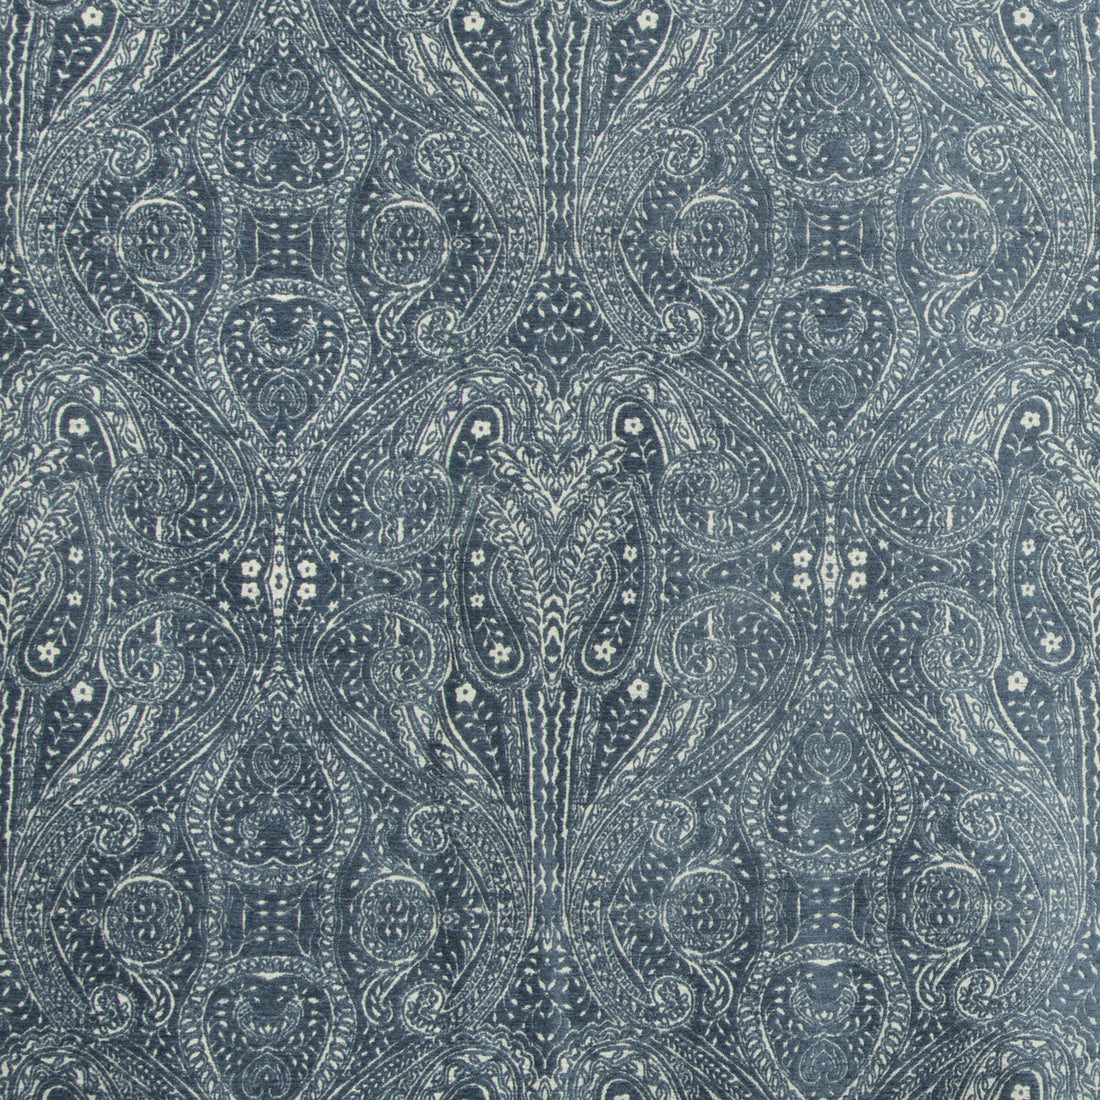 Kravet Design fabric in 34720-5 color - pattern 34720.5.0 - by Kravet Design in the Gis collection